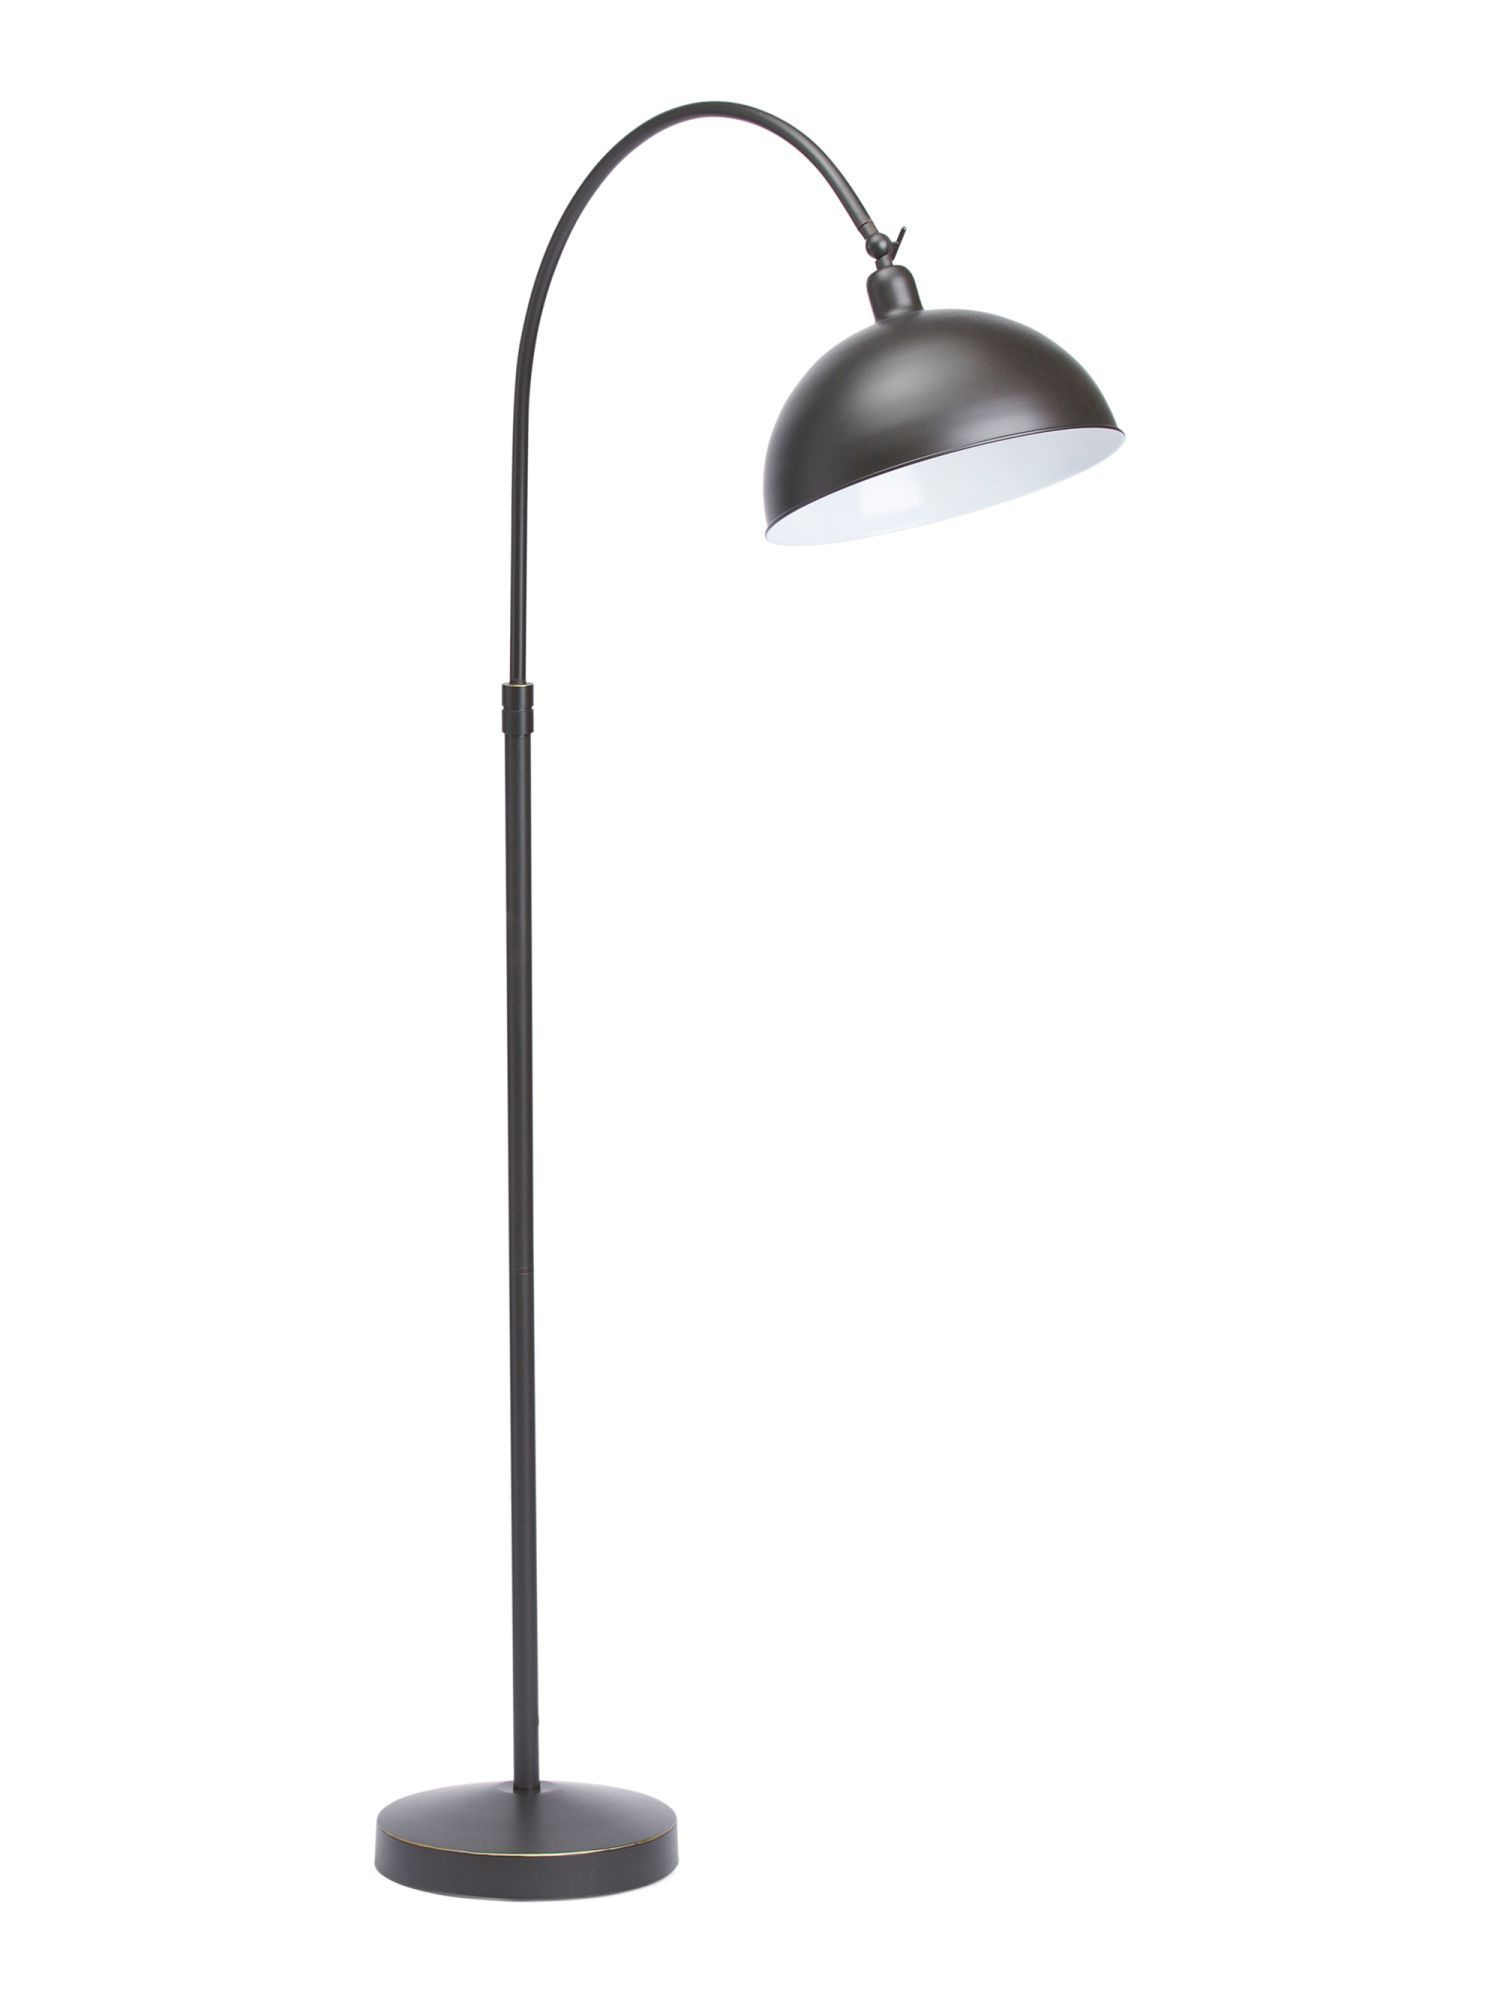 Adjustable Metal Floor Lamp Floor Lamp Home Lighting within sizing 1500 X 2000